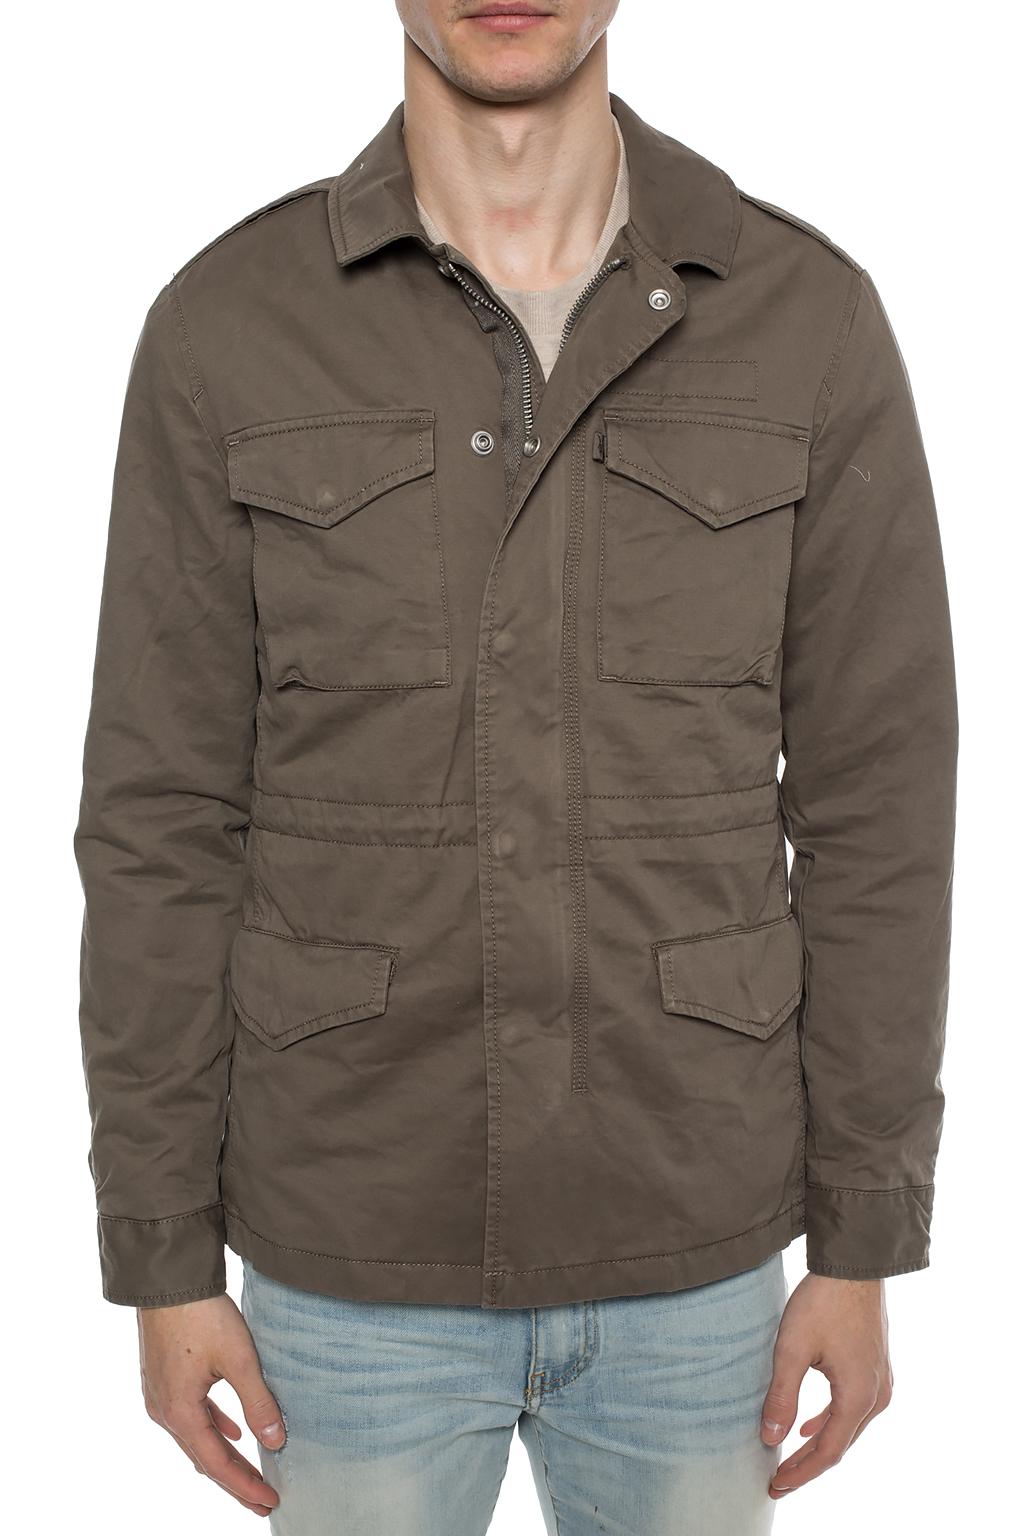 AllSaints ‘Cote’ jacket with pockets | Men's Clothing | Vitkac